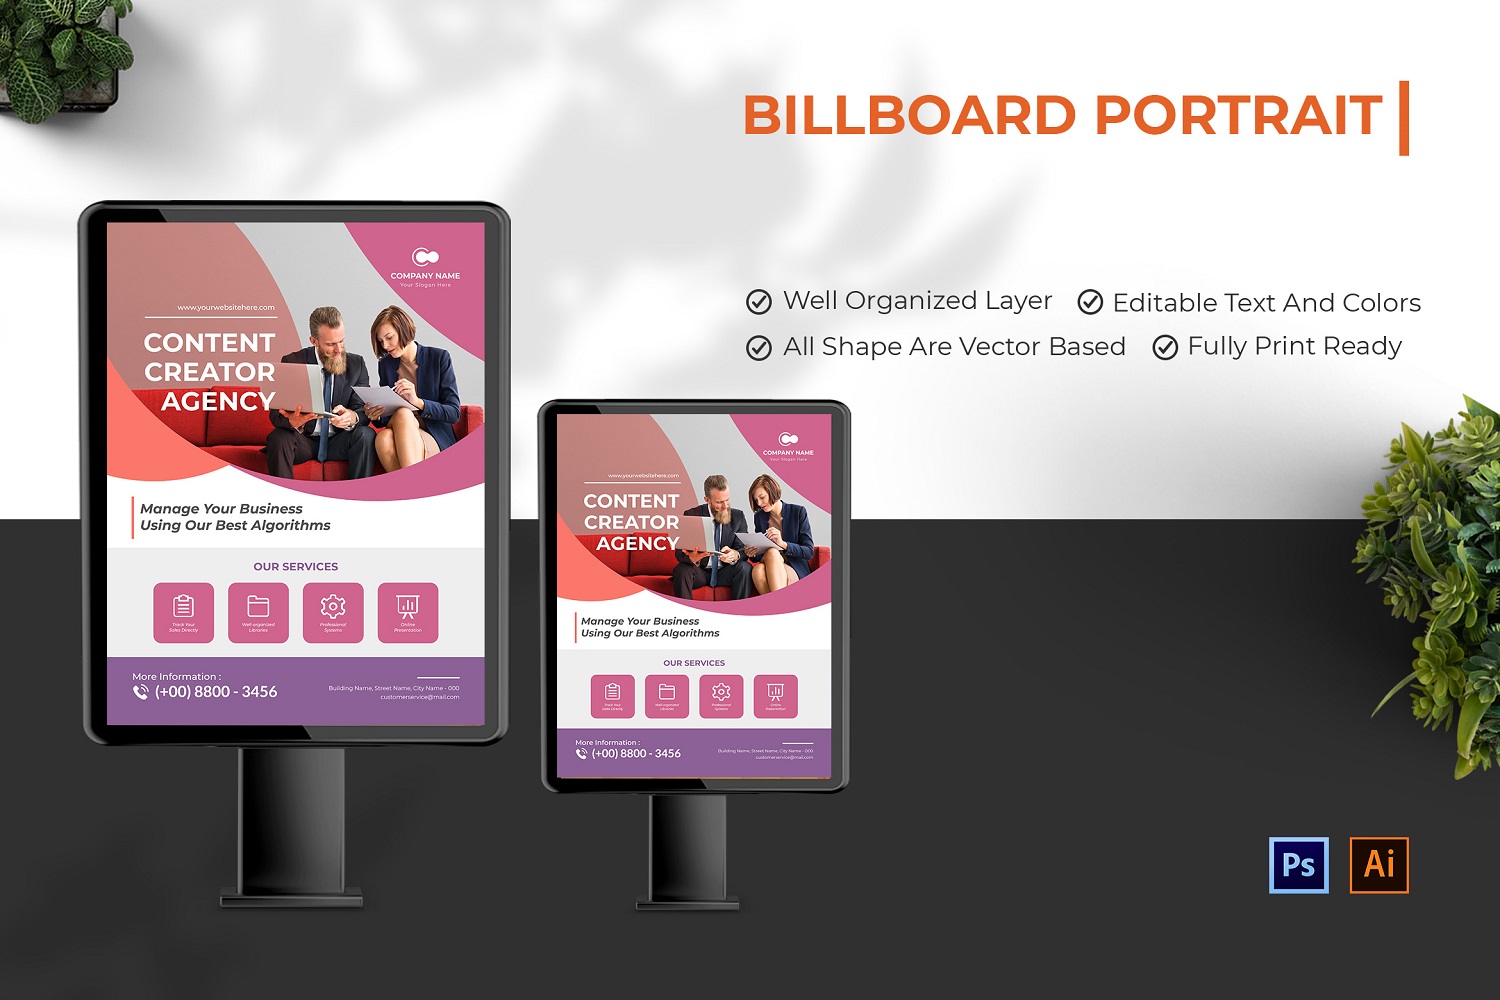 Content Creator Agency Billboard Portrait